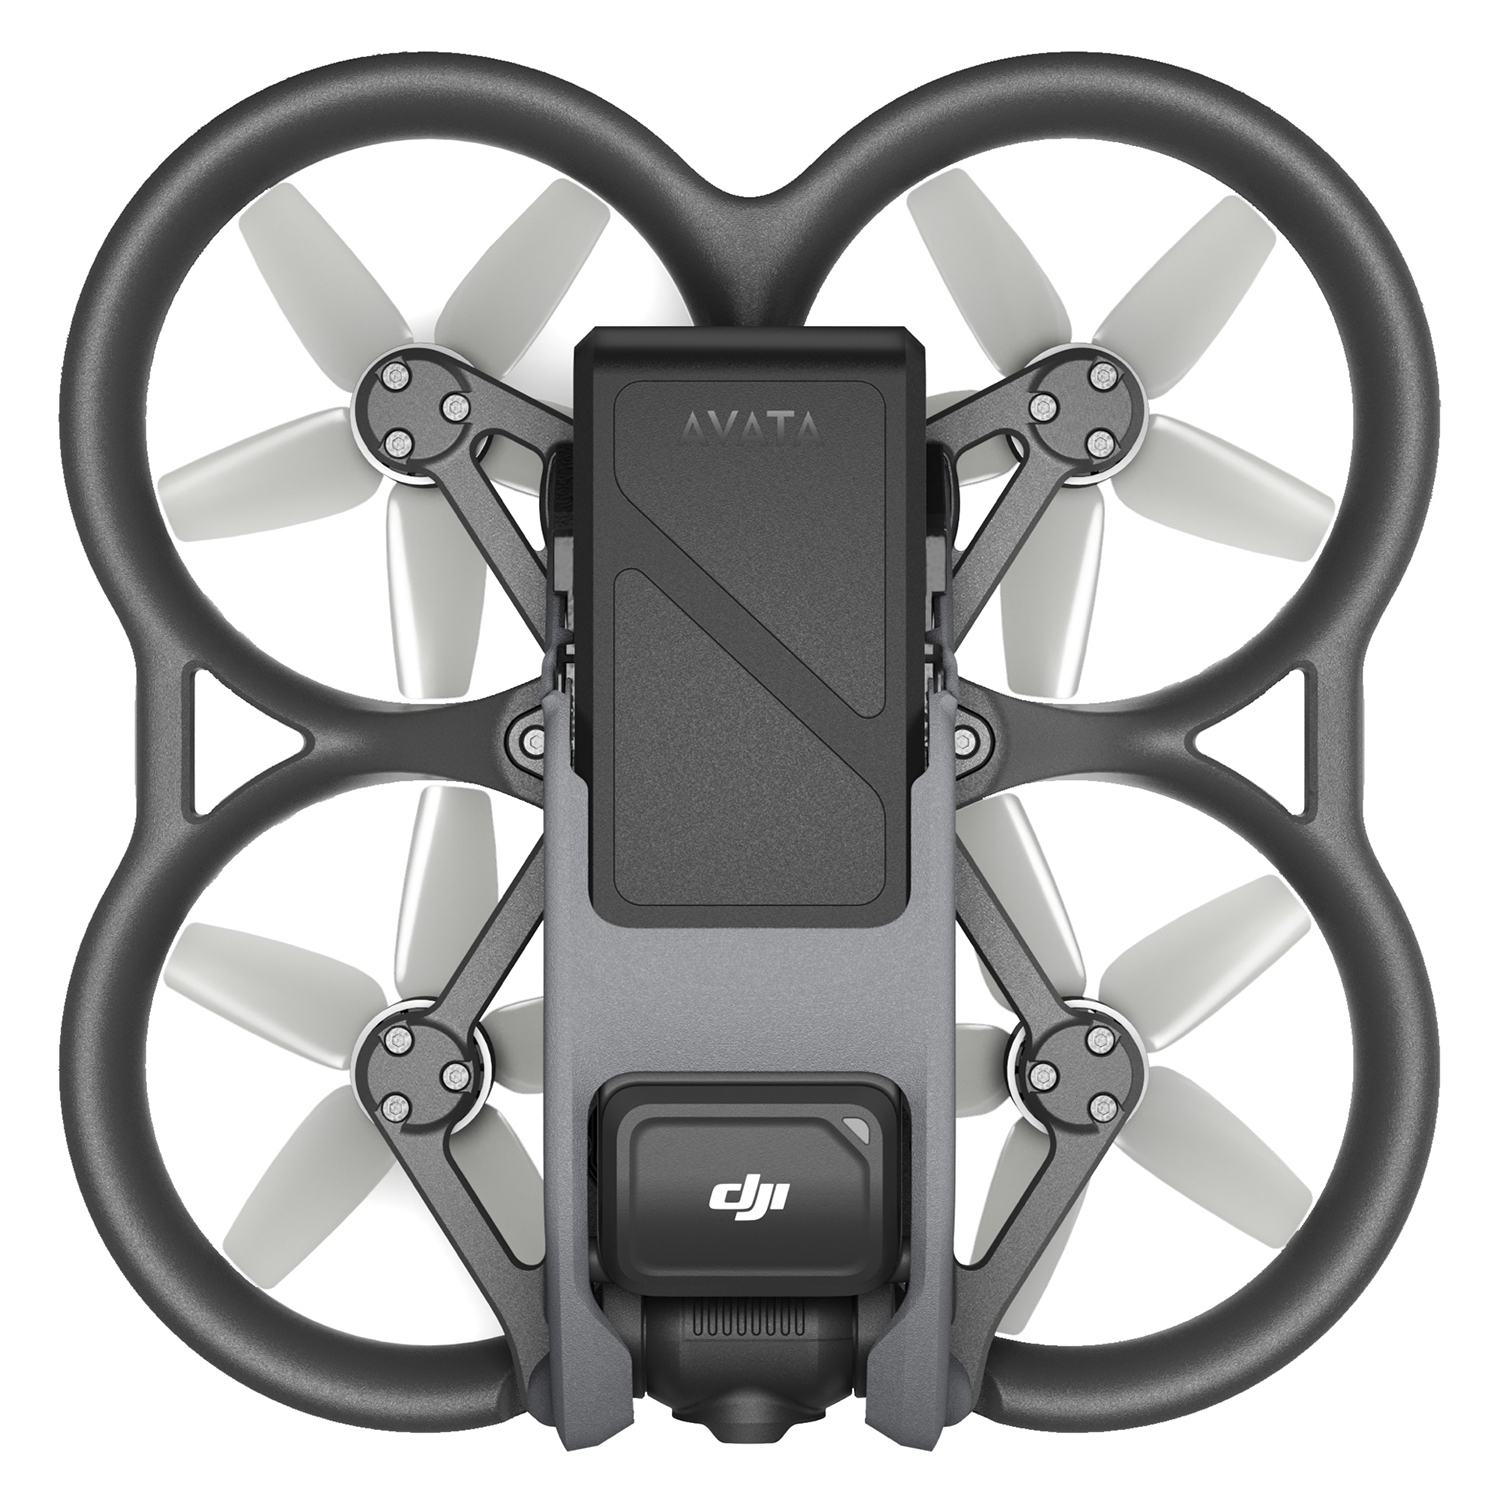 Drone DJI Avata Fly Smart Combo